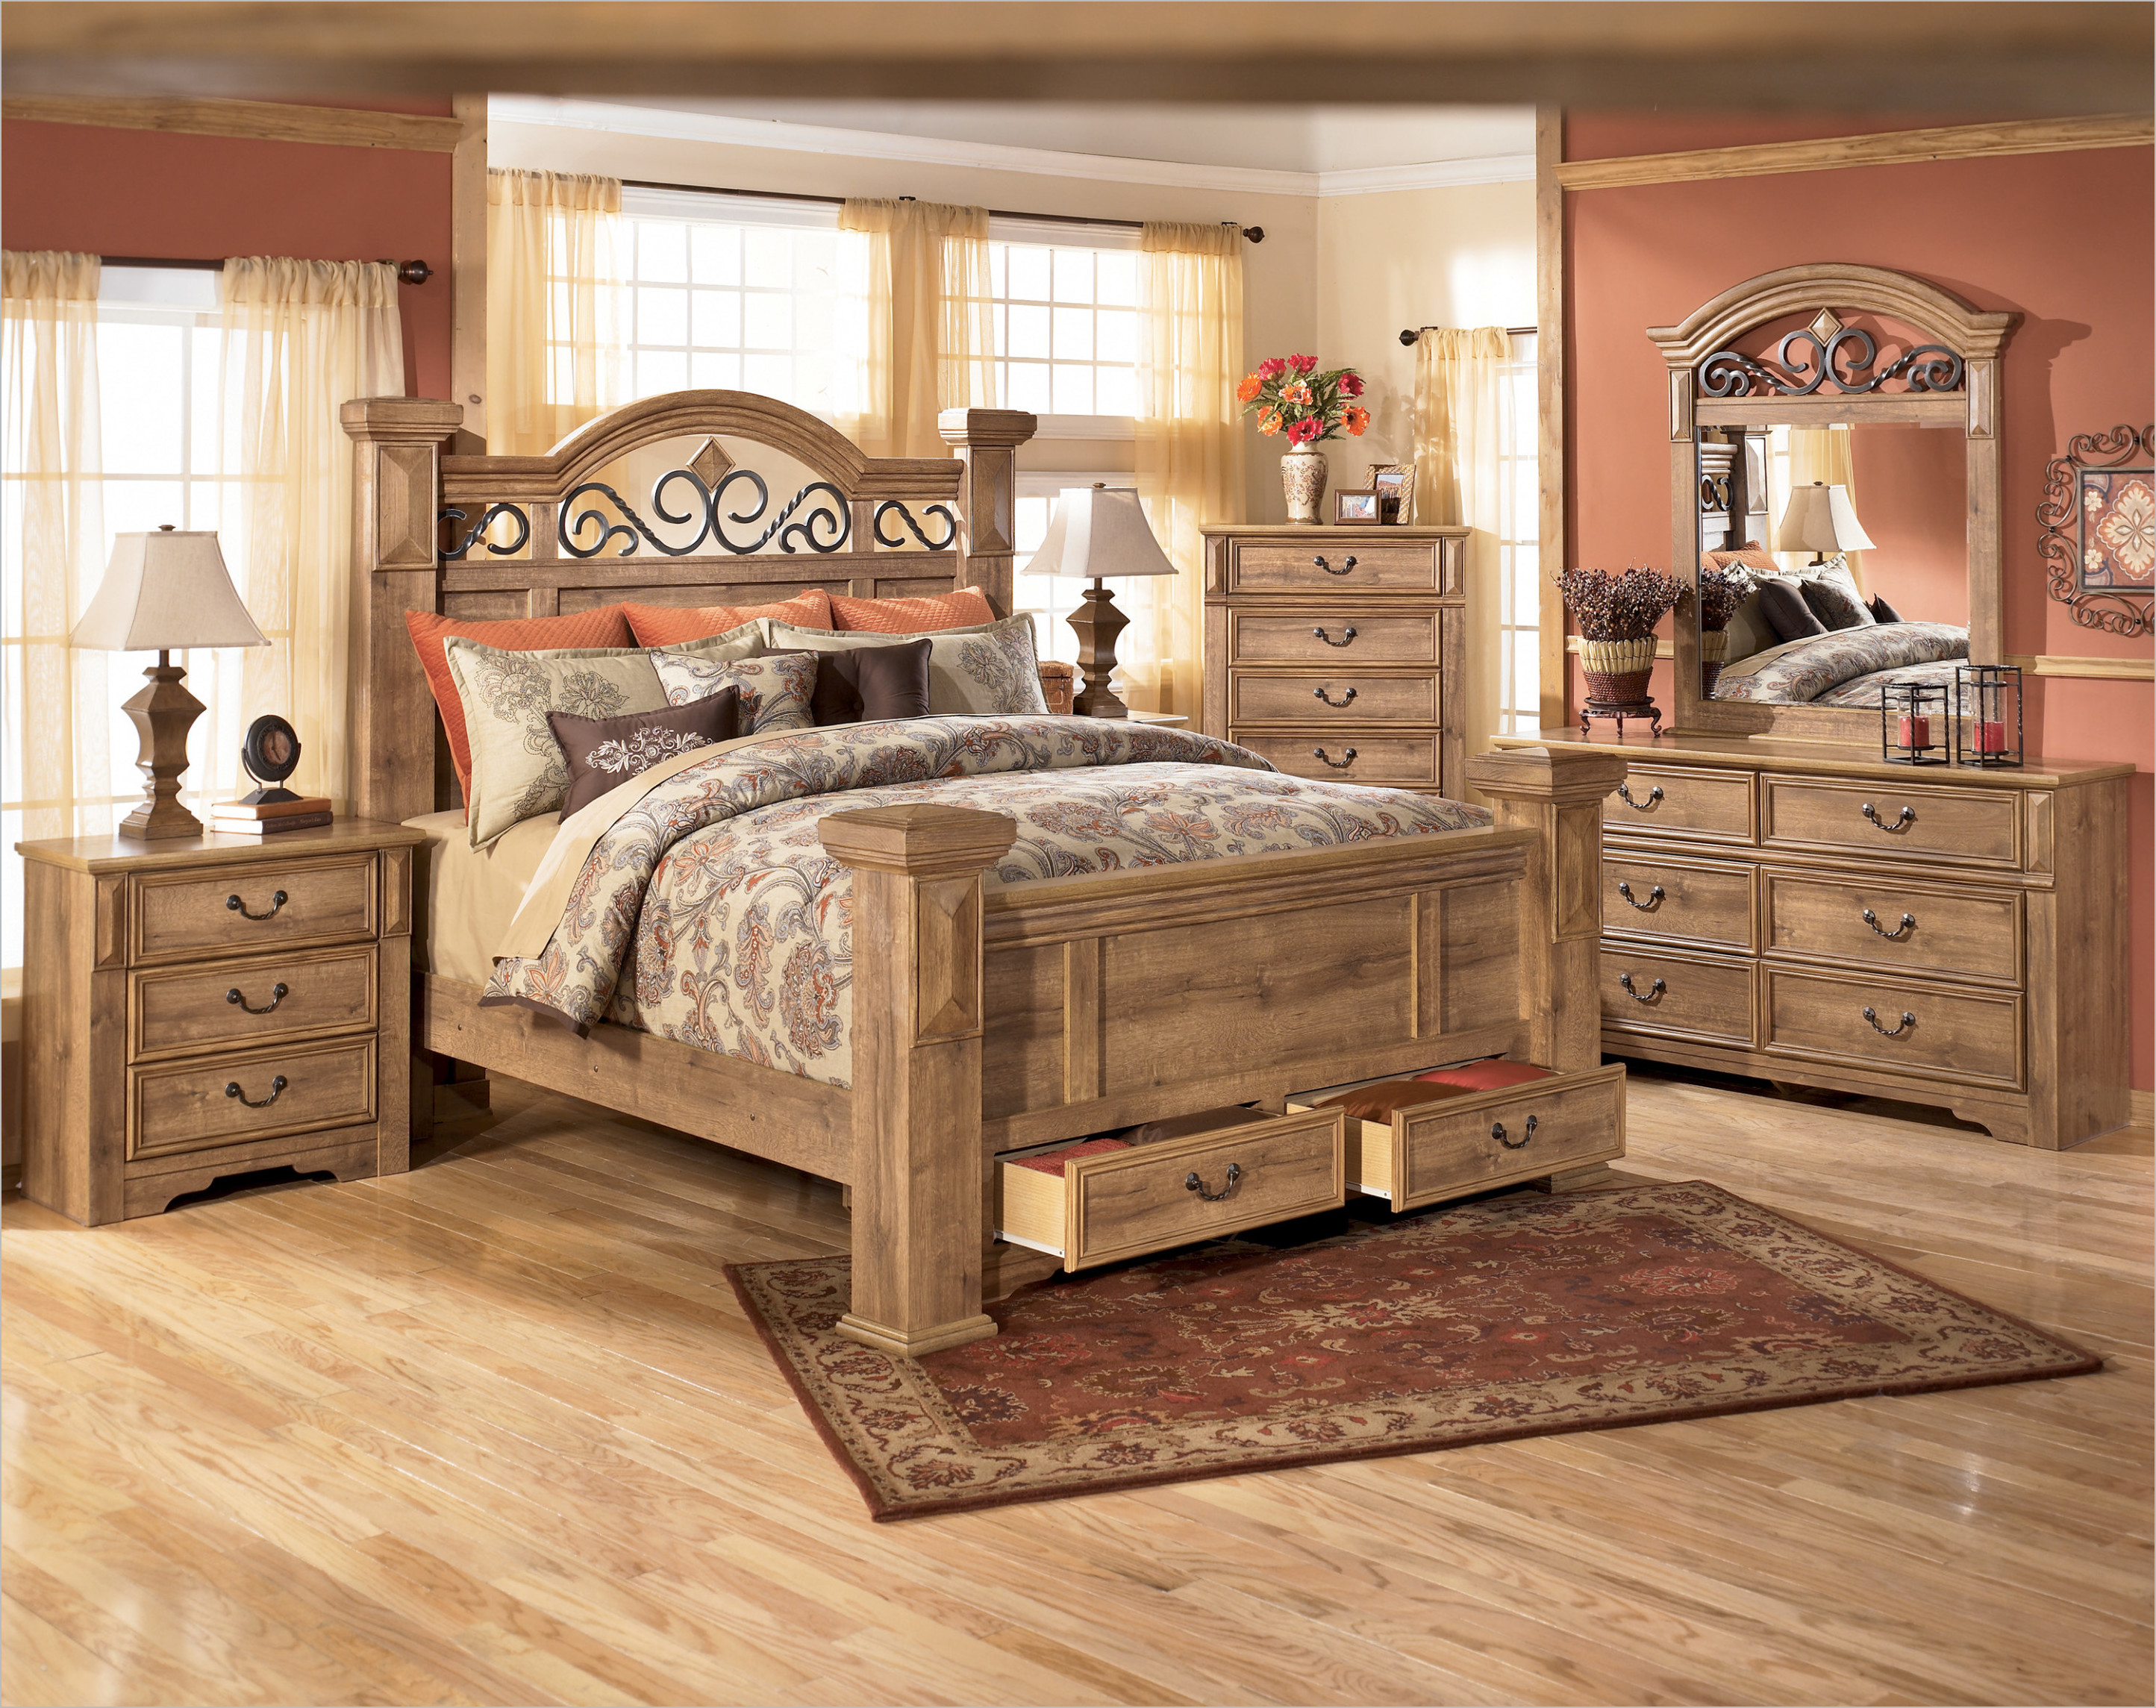 Old Wood Bedroom Furniture Eo Furniture regarding dimensions 2889 X 2289